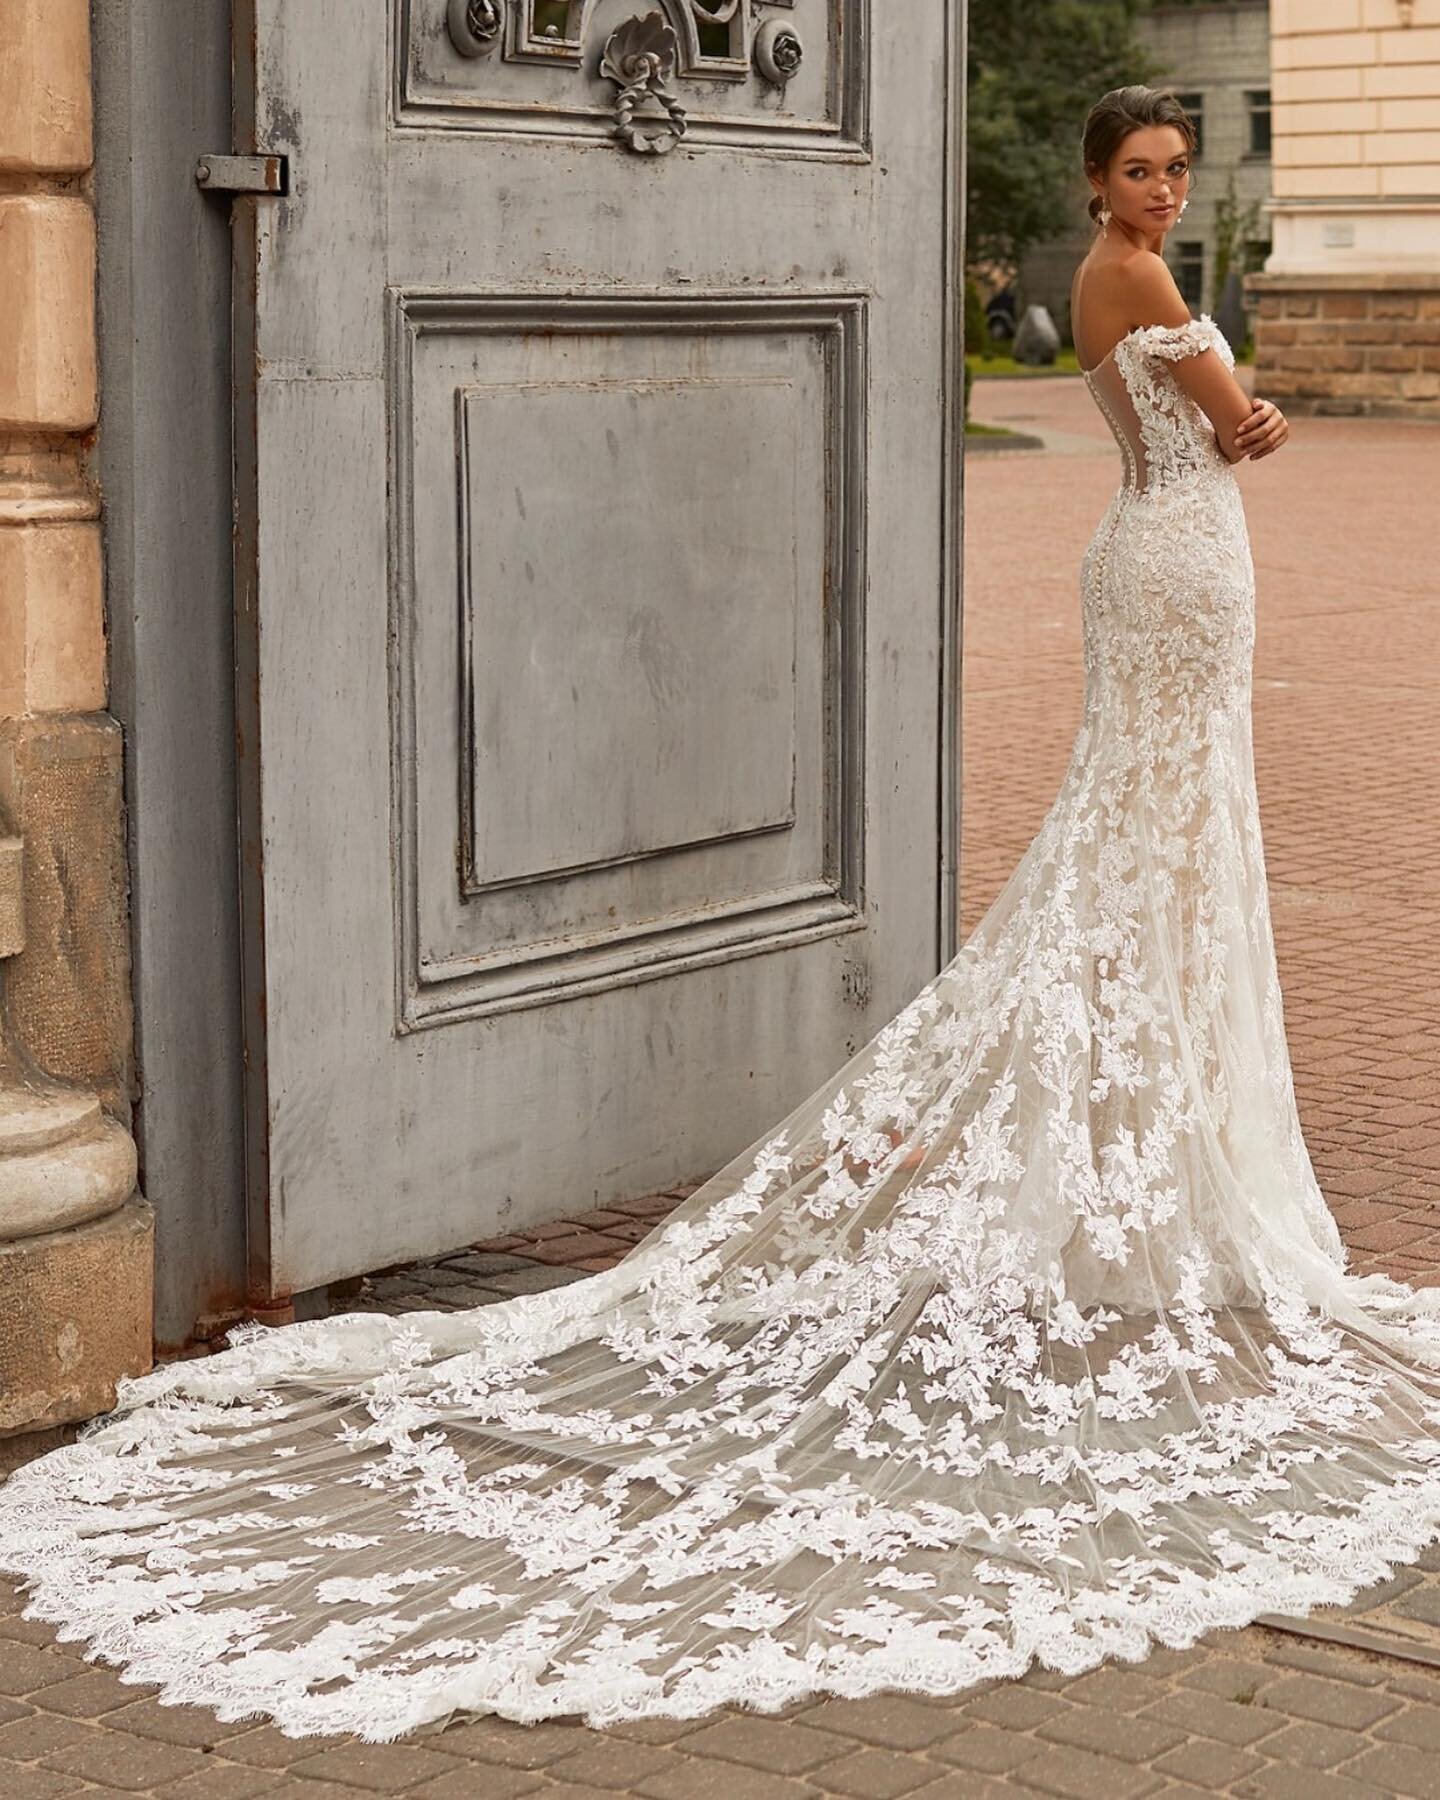 ✨Dress spotlight ✨
We are in love with the stunning train and lace detail on this @valstefani MONACO dress! 🫶 

#bestoflasvegas #wedding #weddingdress #weddinggown #weddingfashion #weddinginspiration #bridal #bridalgown #bridalstyle #bridalchic #bri